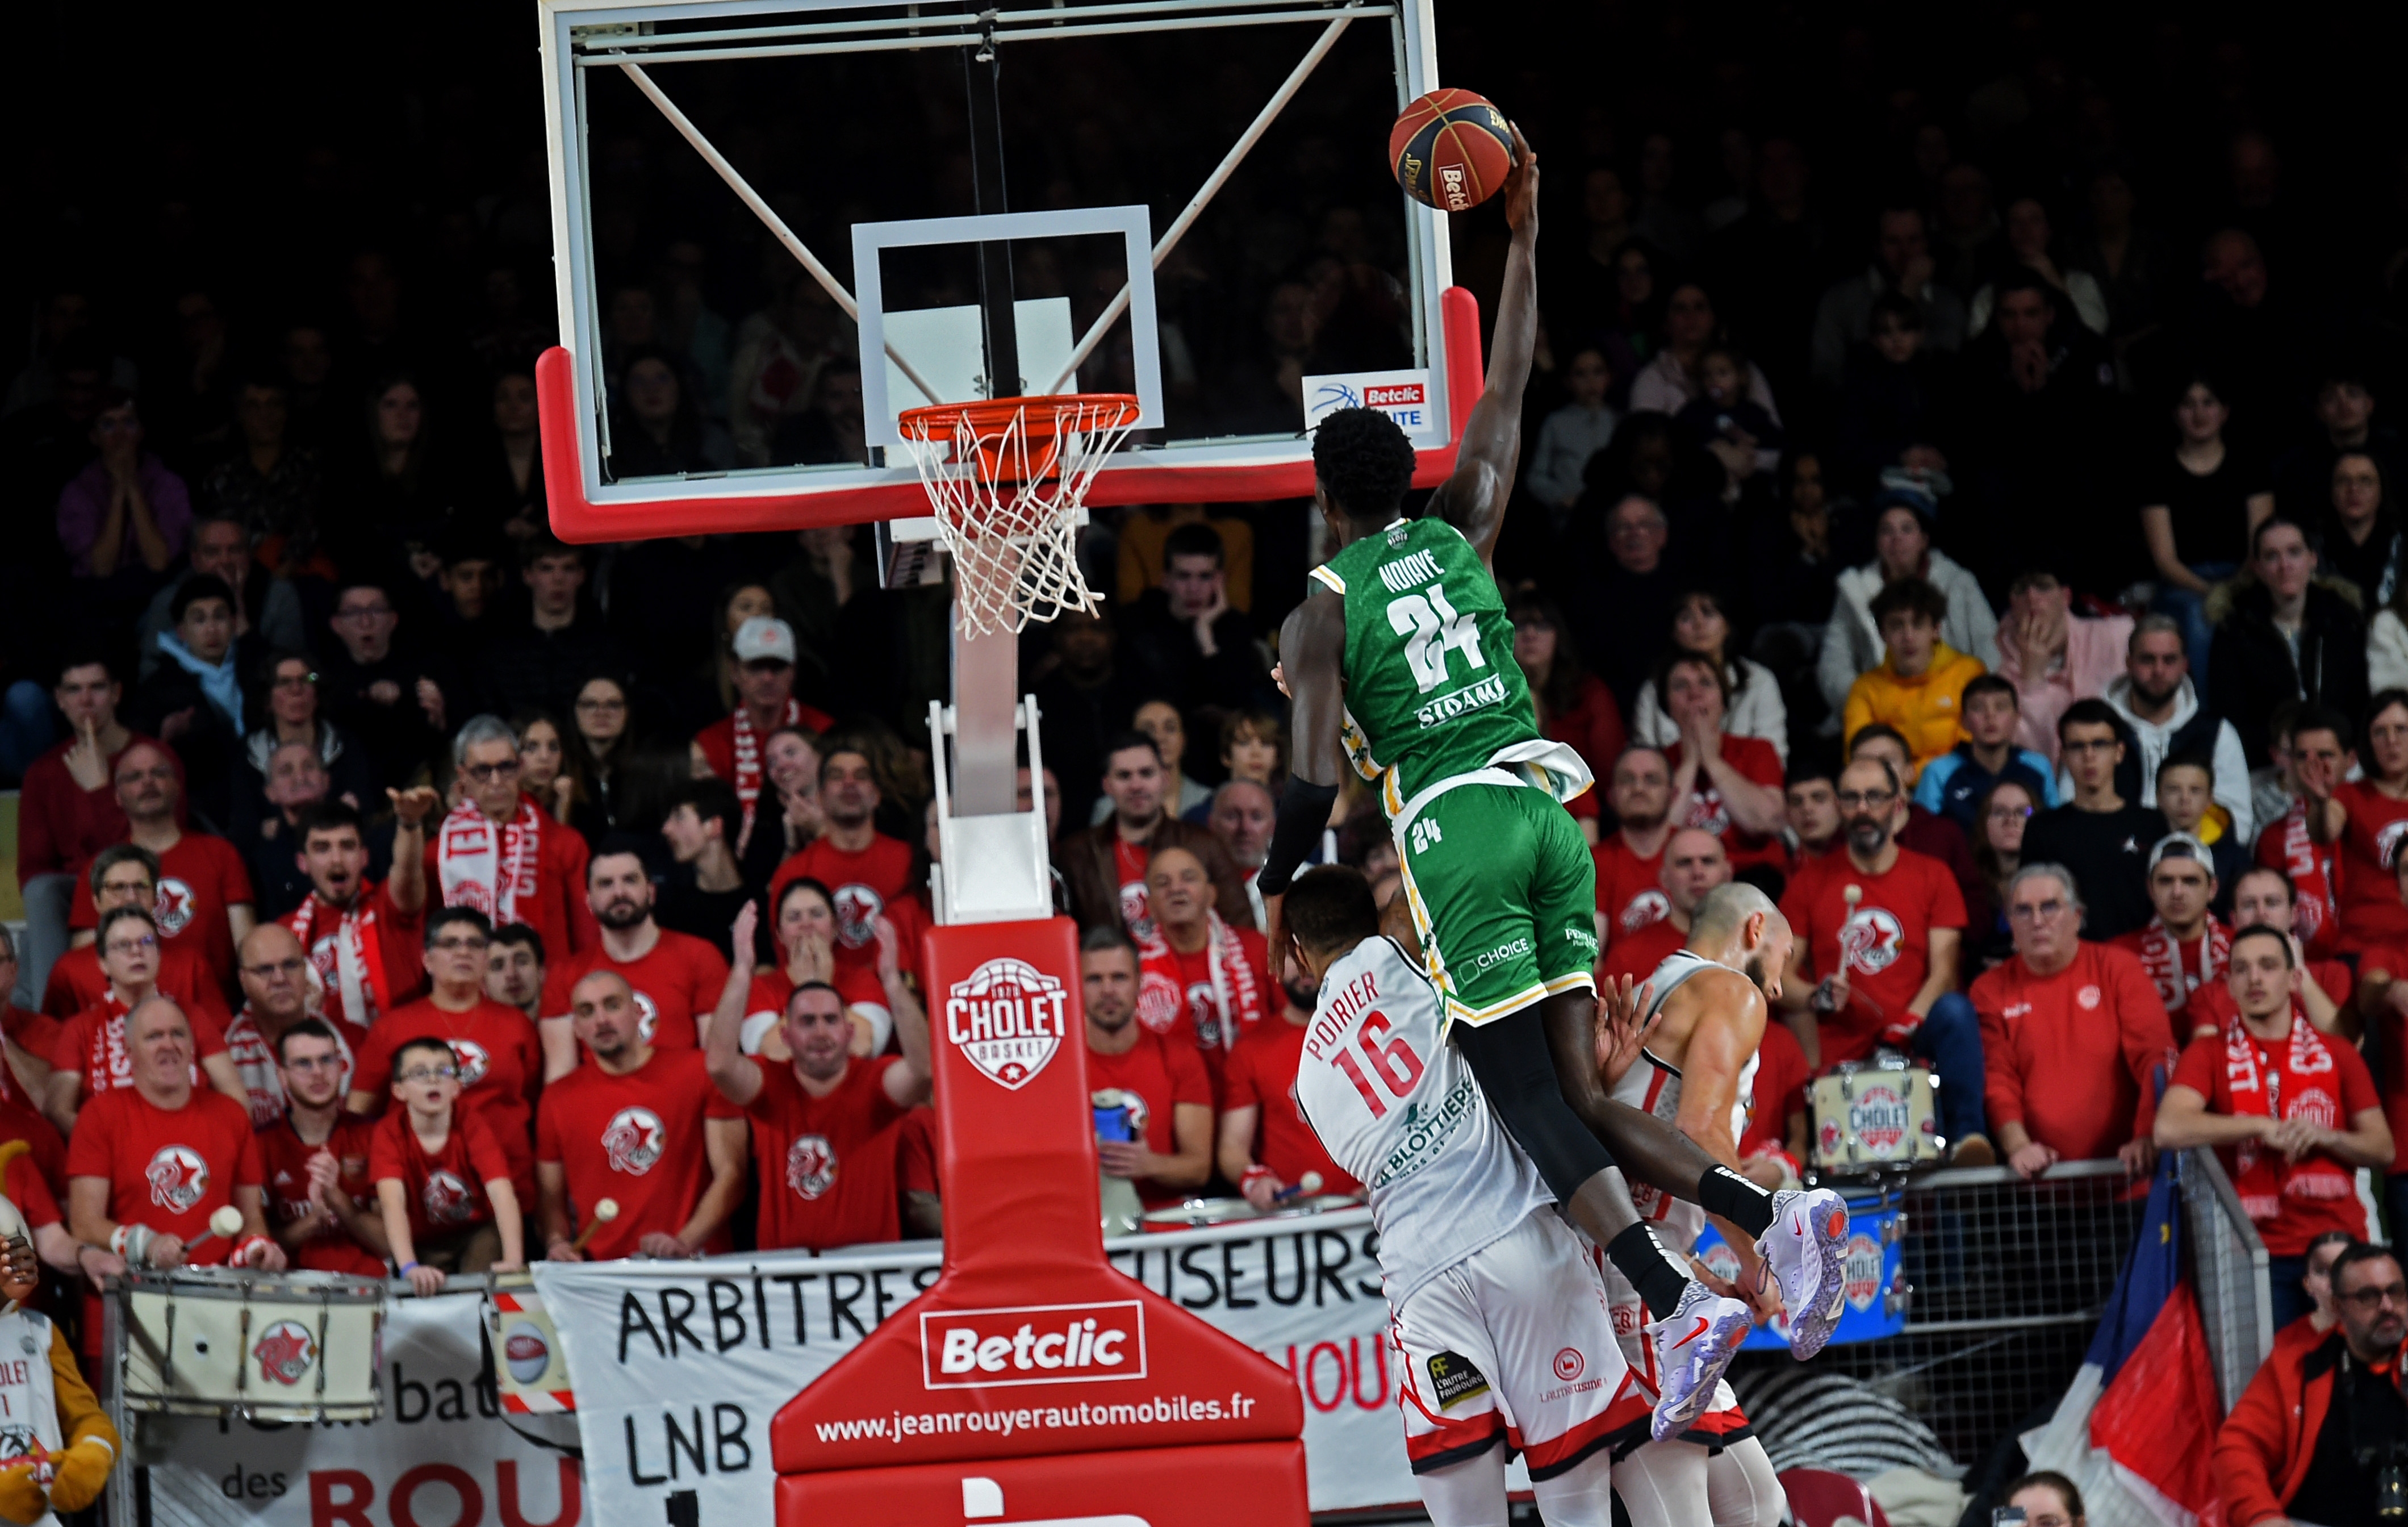 Cholet Basket VS Blois (21/01/2023)